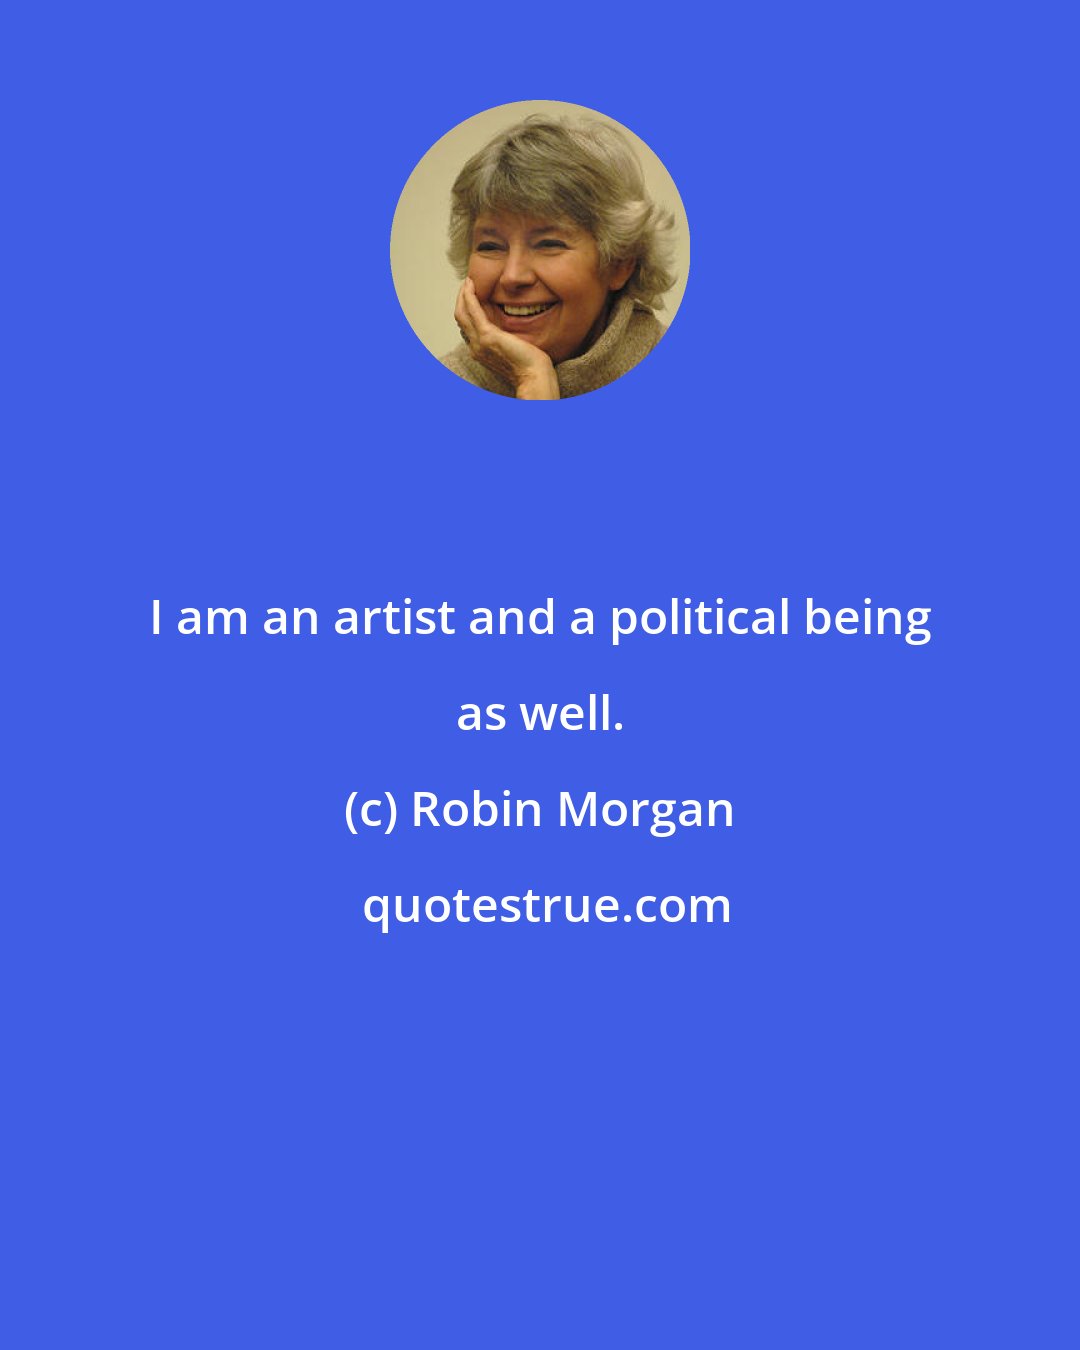 Robin Morgan: I am an artist and a political being as well.